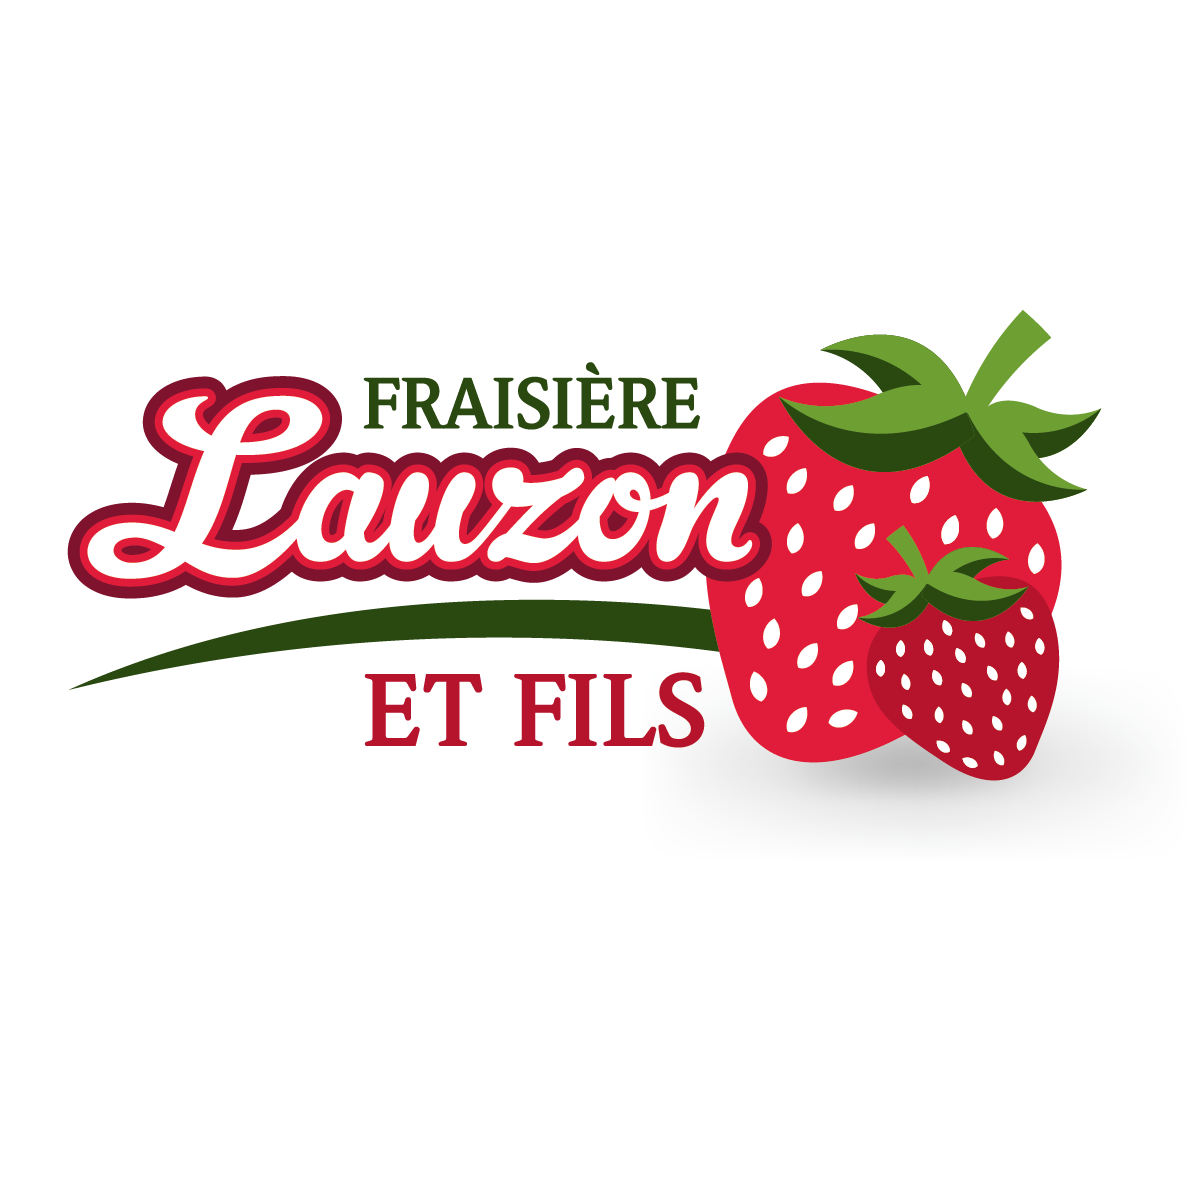 https://cdn.ca.yapla.com/company/CPYlFBKFKU4nbGwsYs52KvXR/member/organization/8341/images/logo-fraisiere-lauzon-et-fils-final-vectorise-1652378120.png